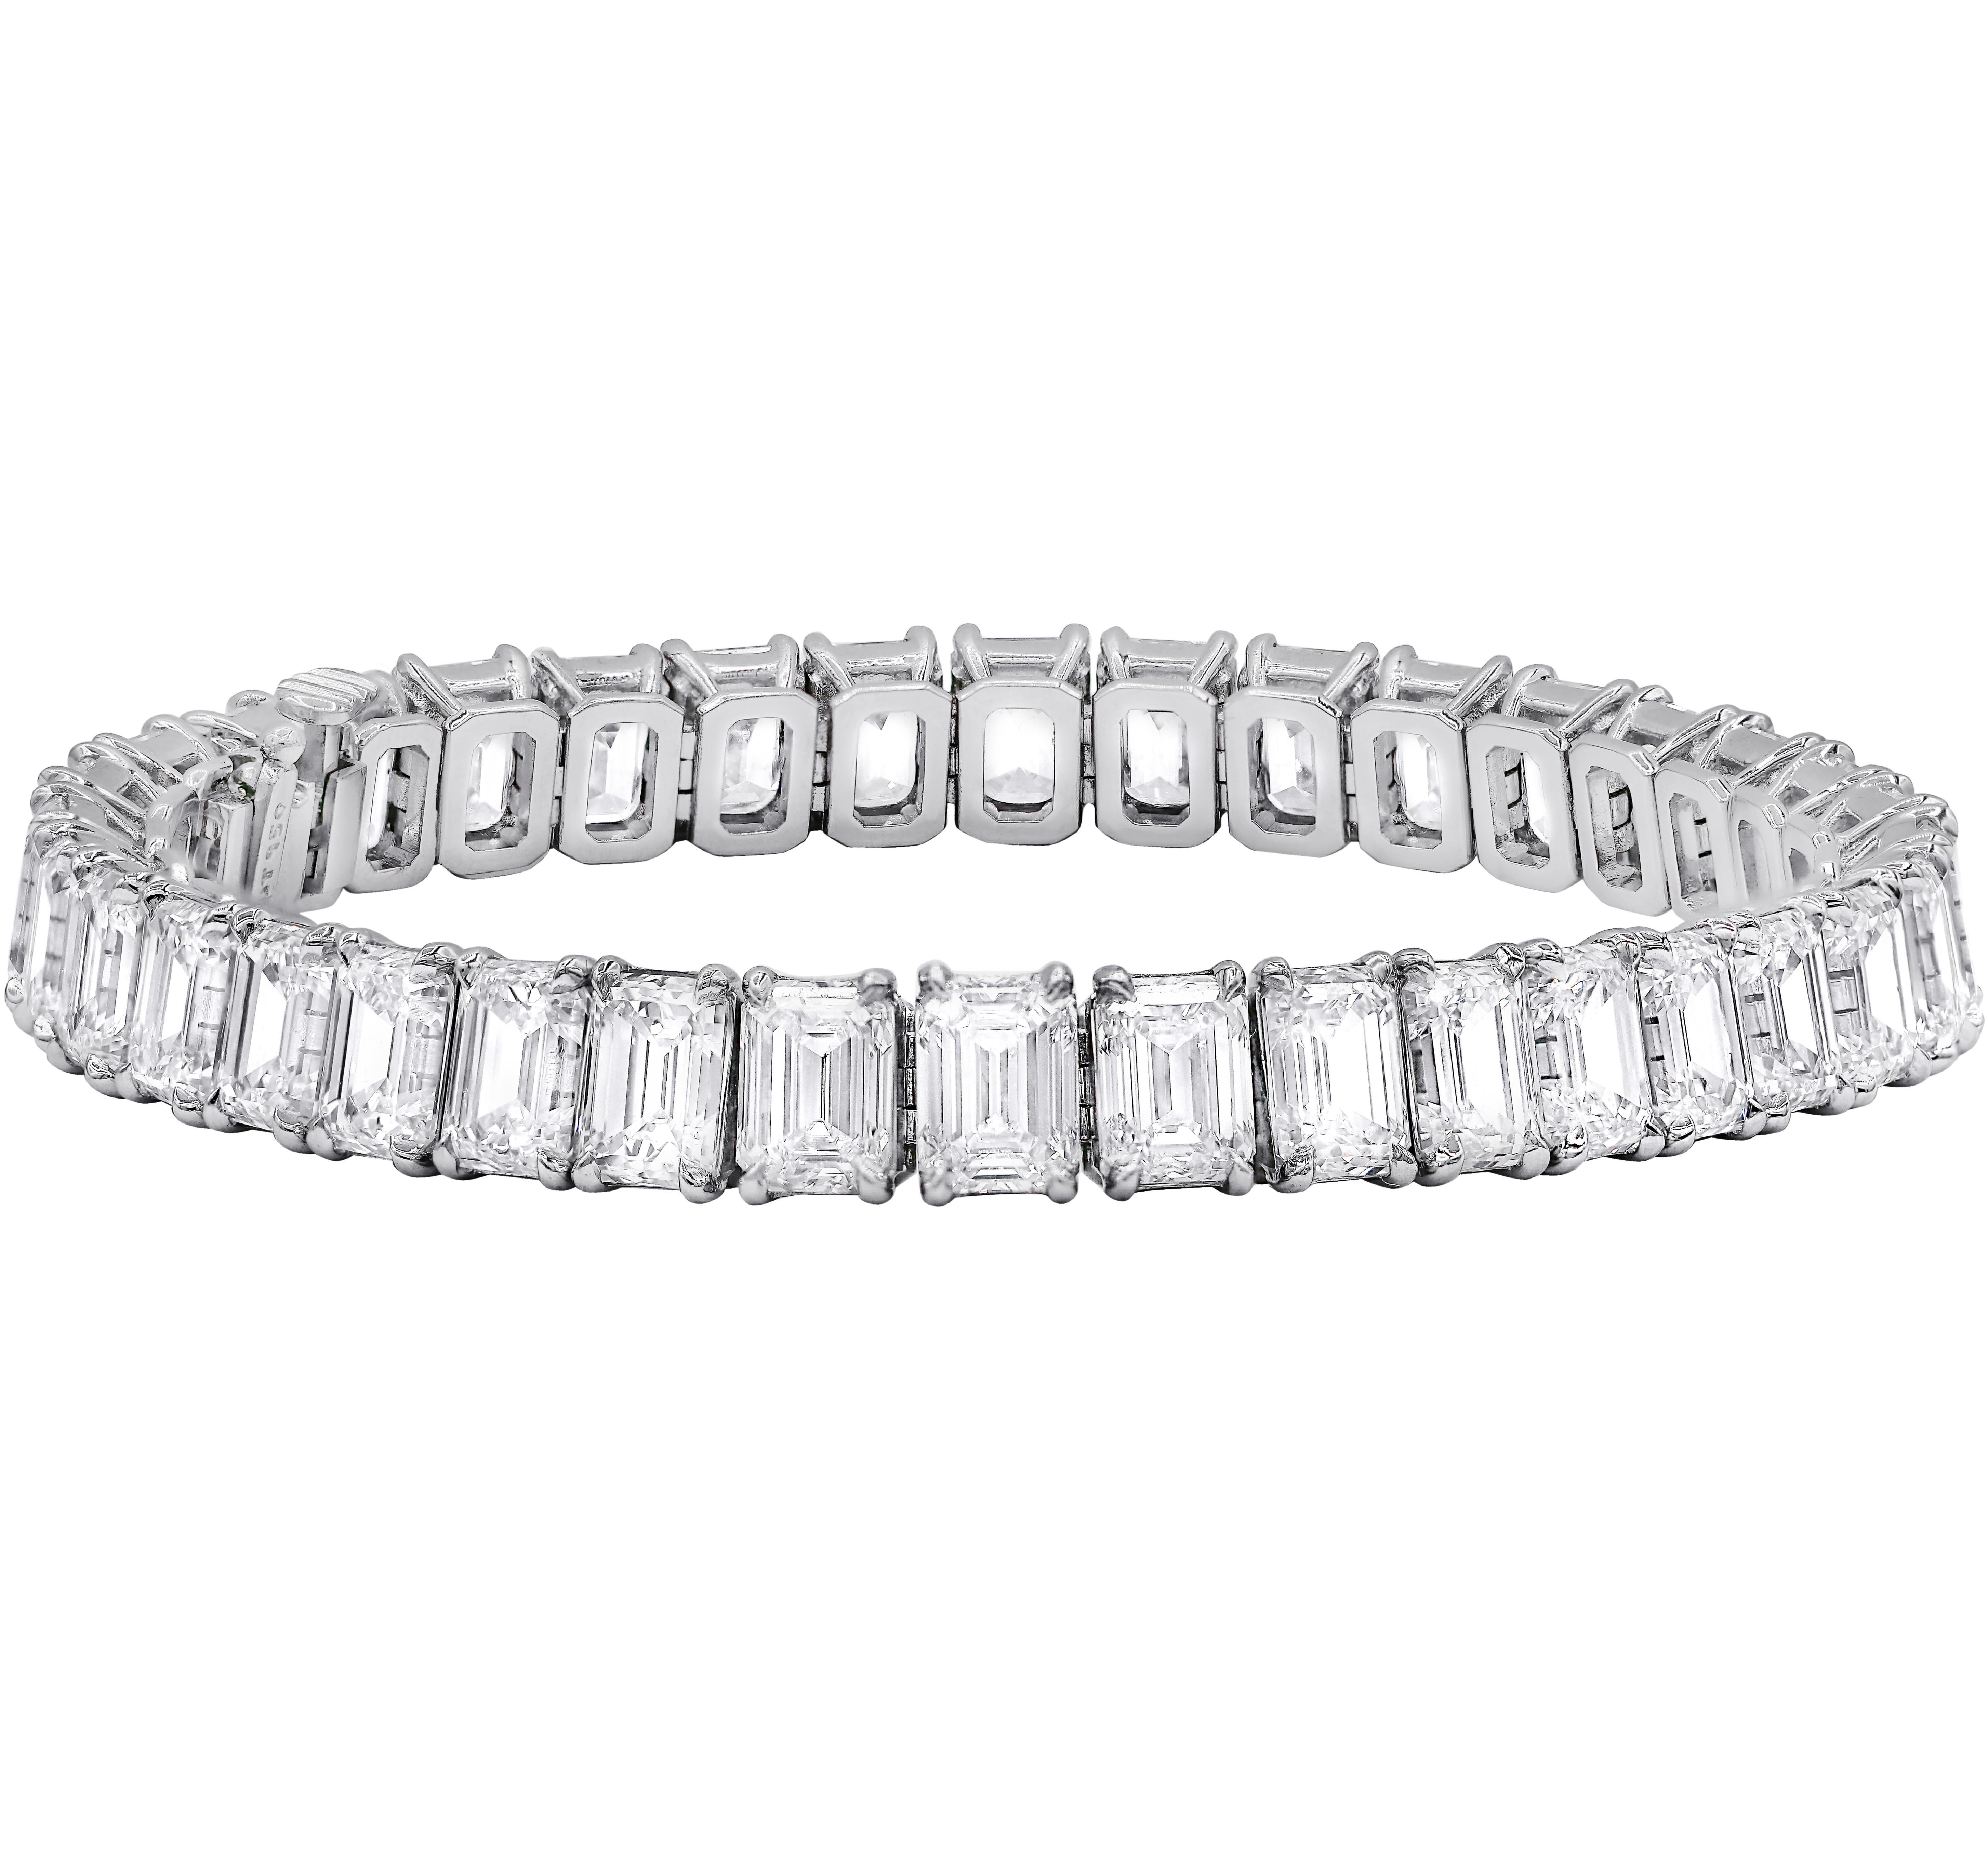 Platinum custom diamond bracelet 34.45 cts emerald cut diamonds 1 Carat each Certified Color  H,I, J, VVS-VS Clarity. Excellent Cut. 
